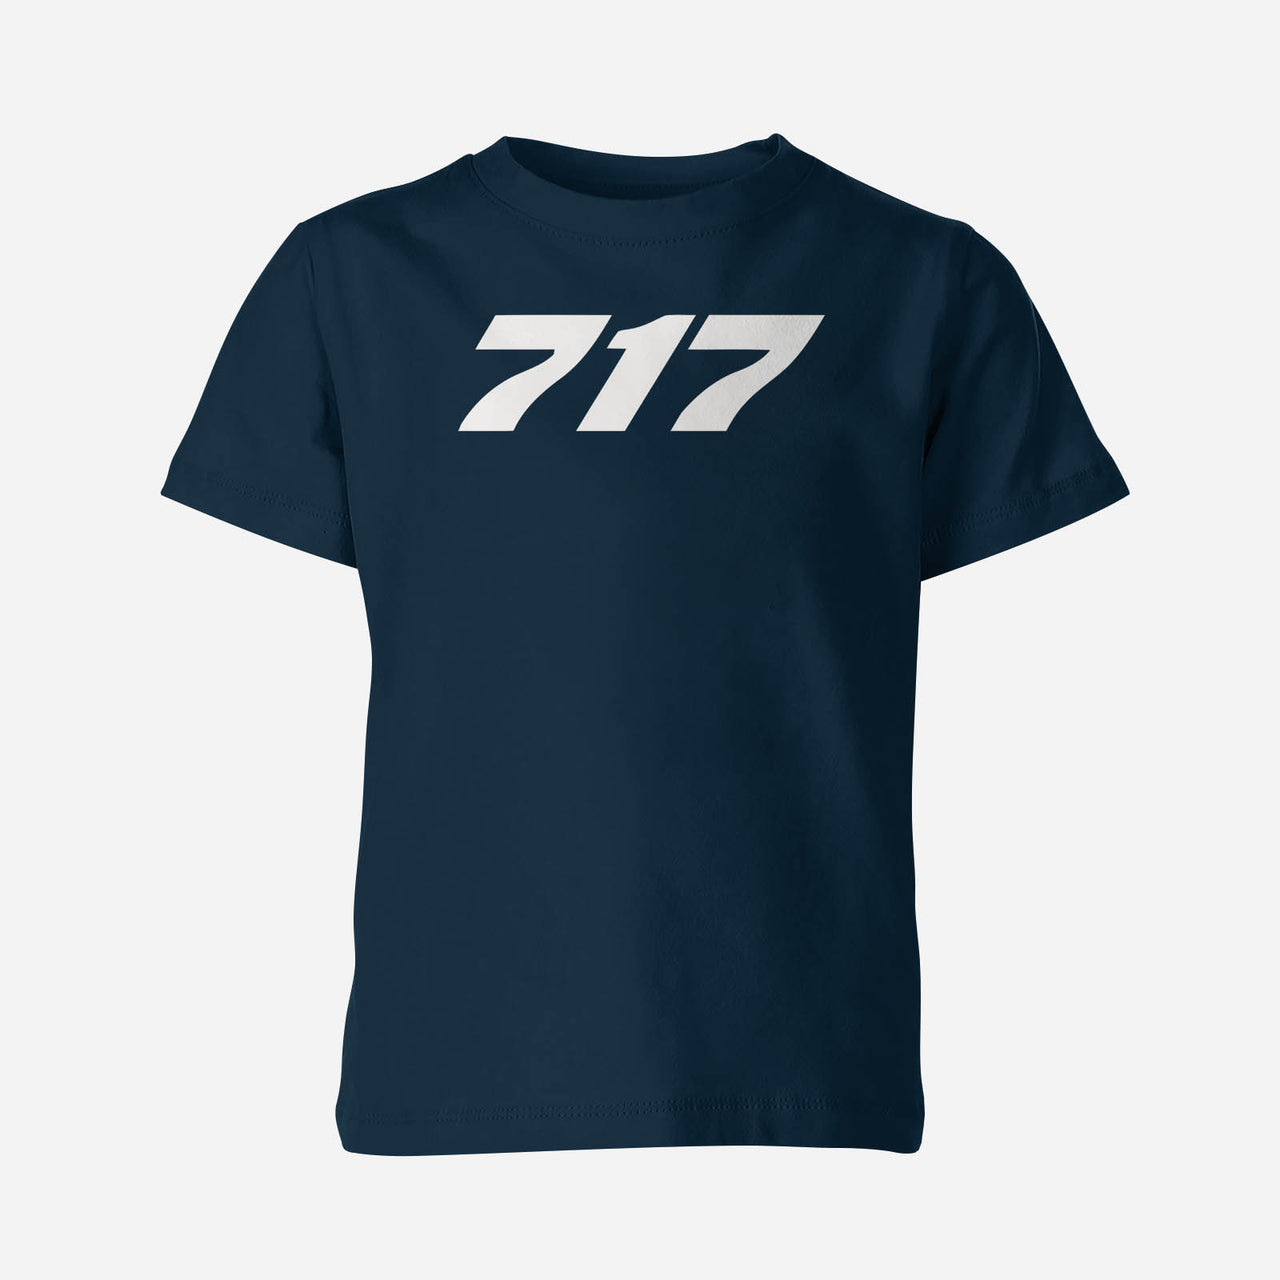 717 Flat Text Designed Children T-Shirts